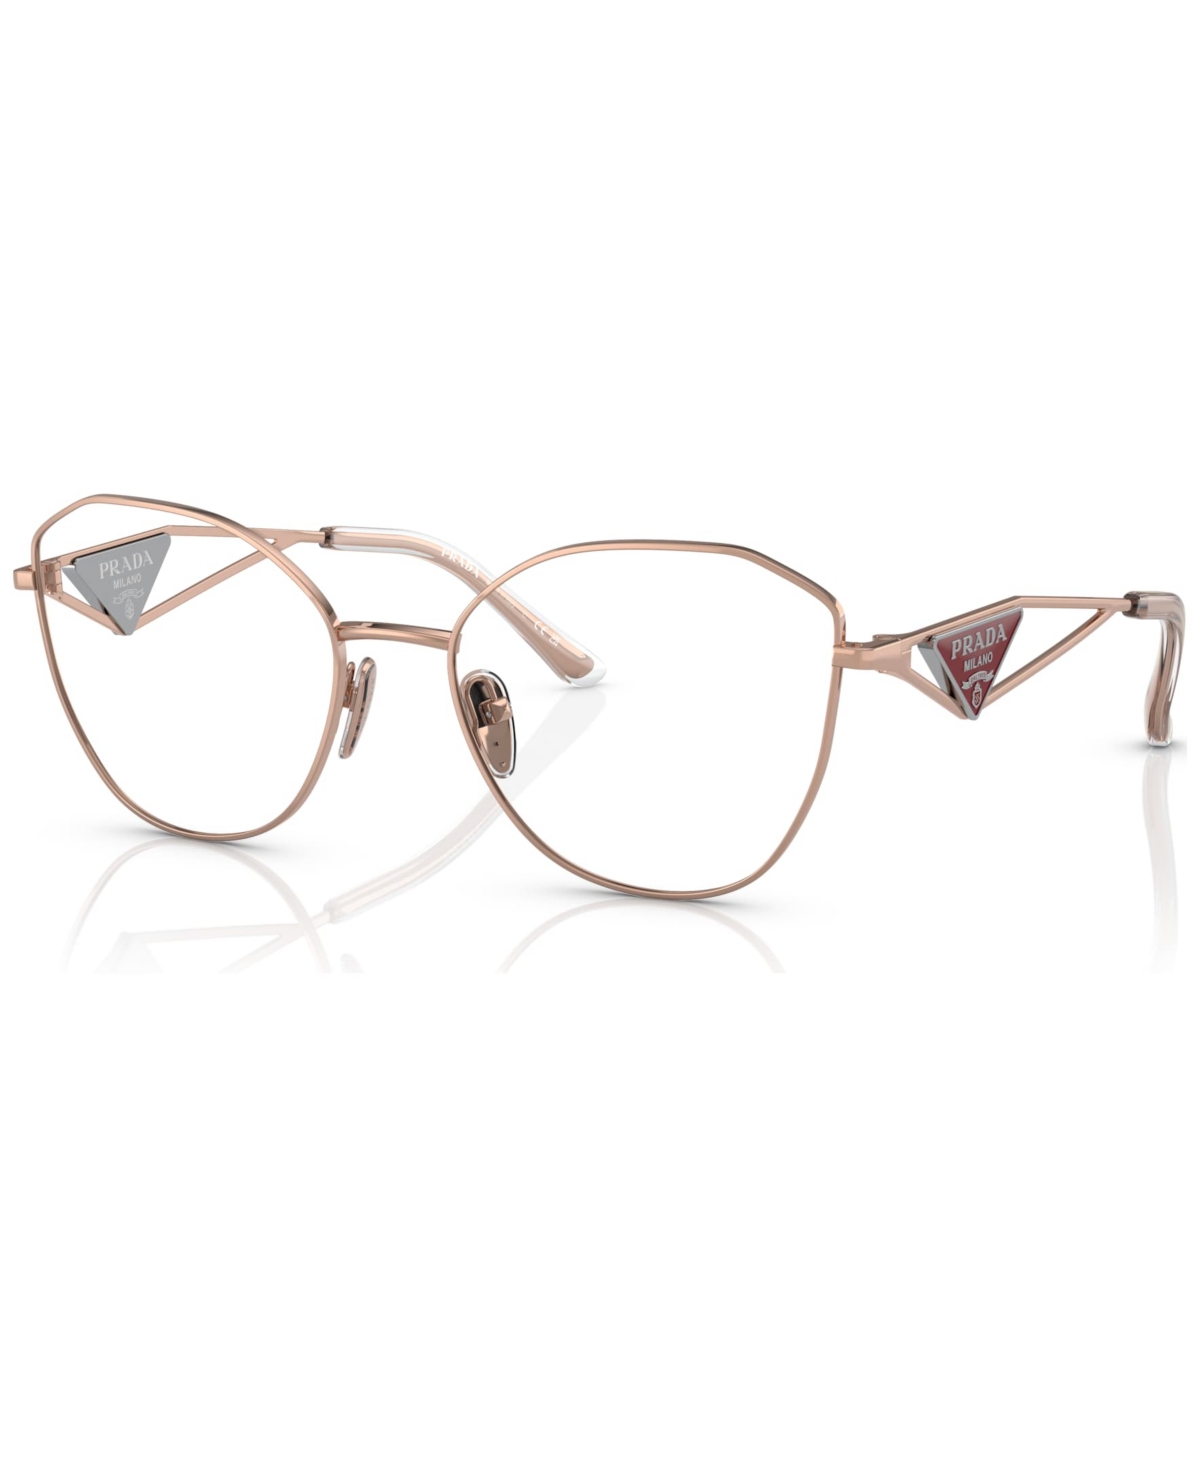 Women's Eyeglasses, Pr 52ZV - Pink Gold